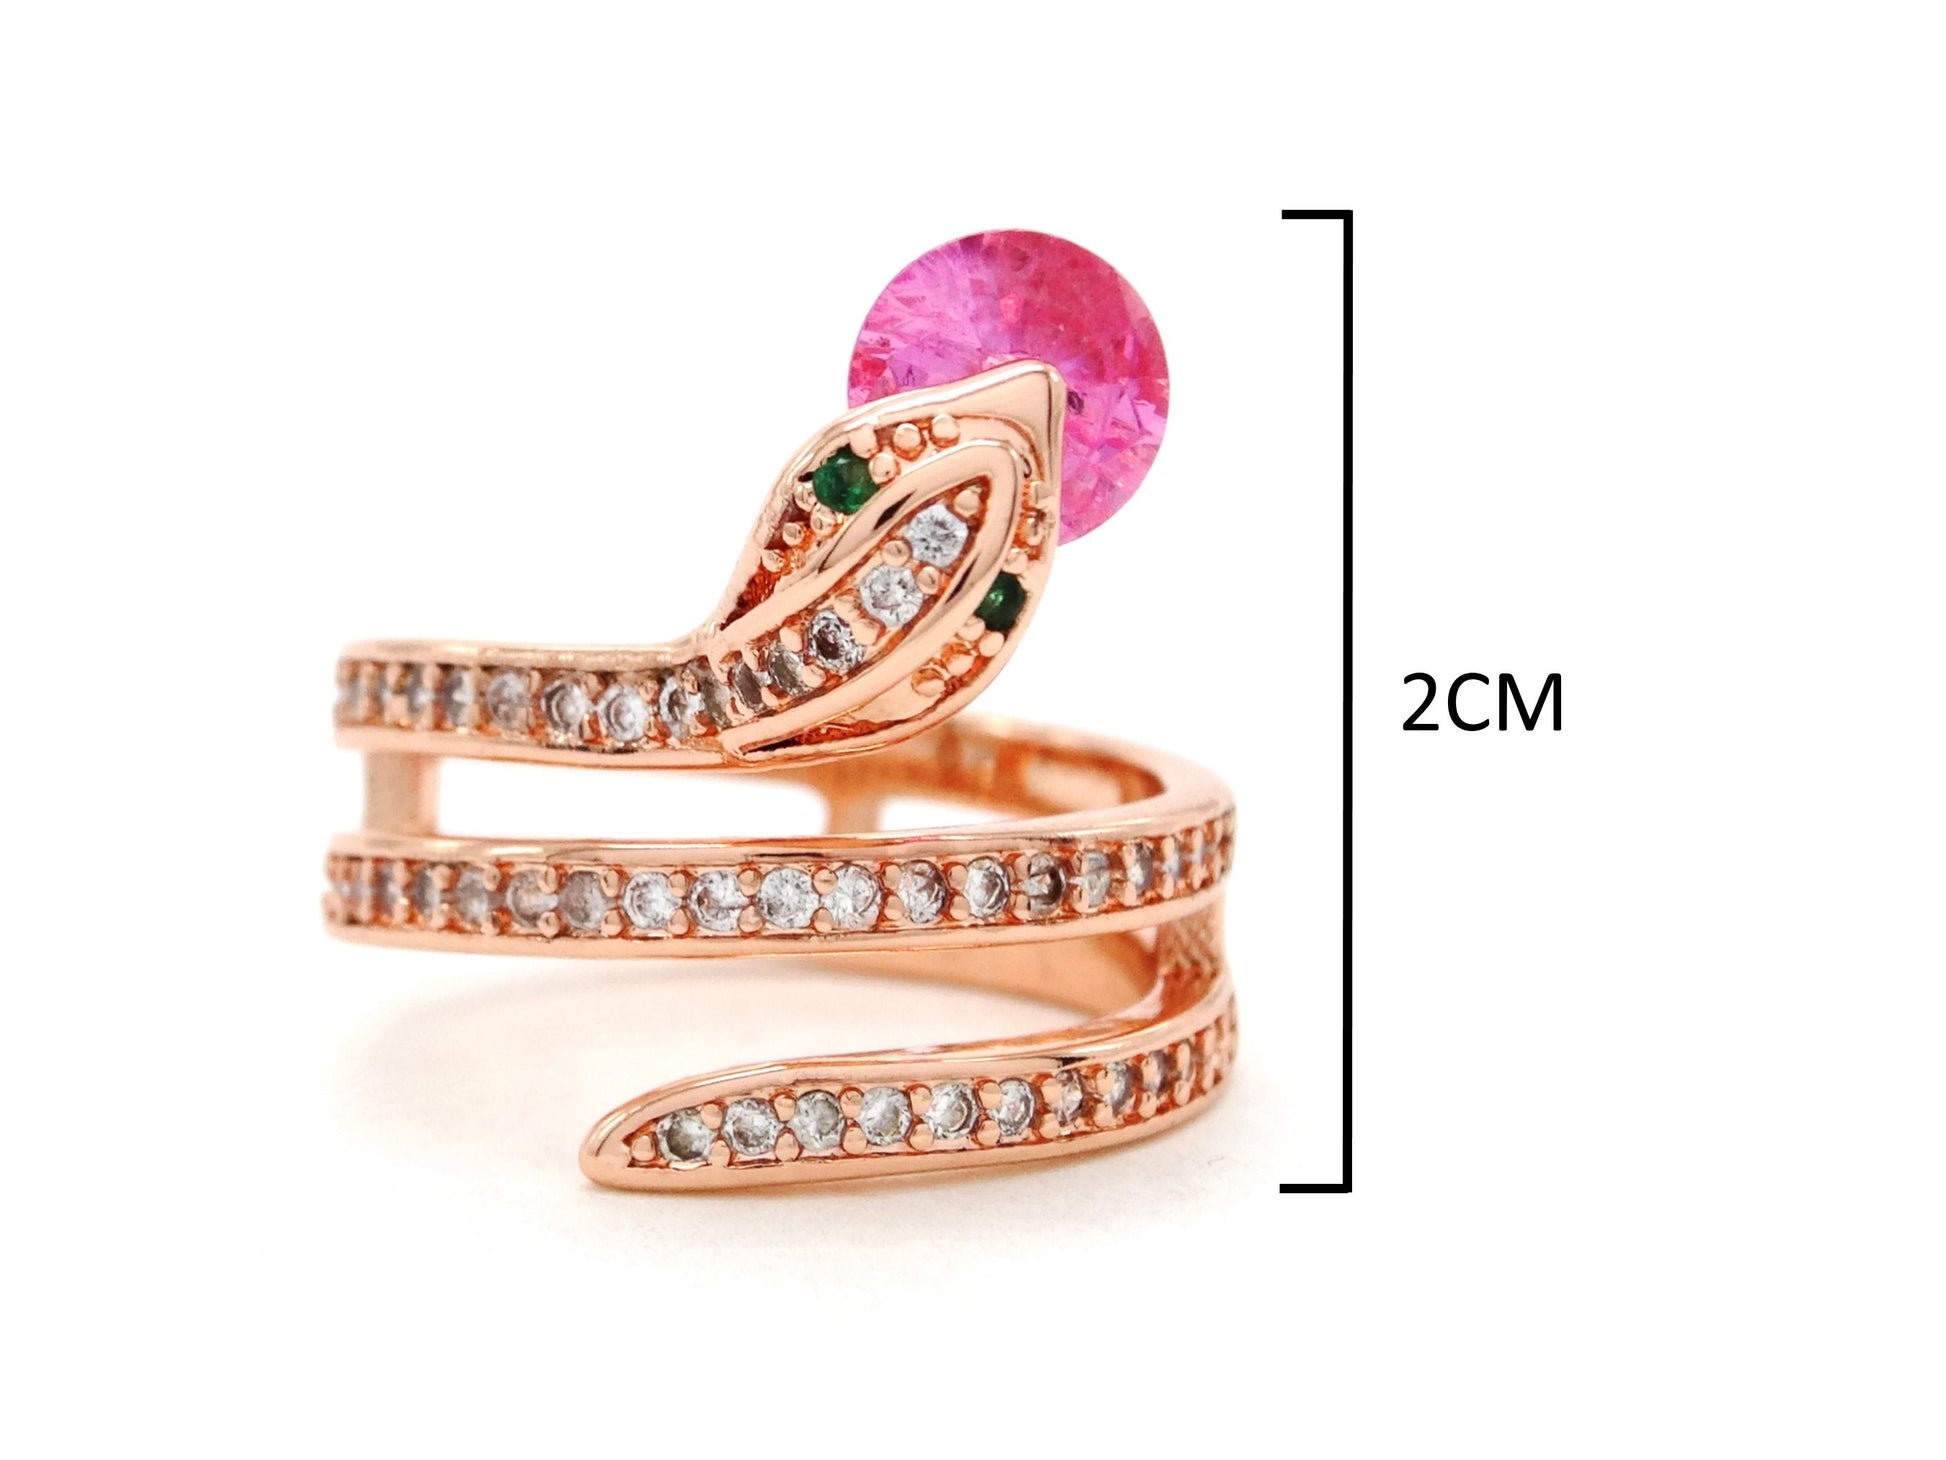 Rose gold snake ring with pink gemstone MEASUREMENT